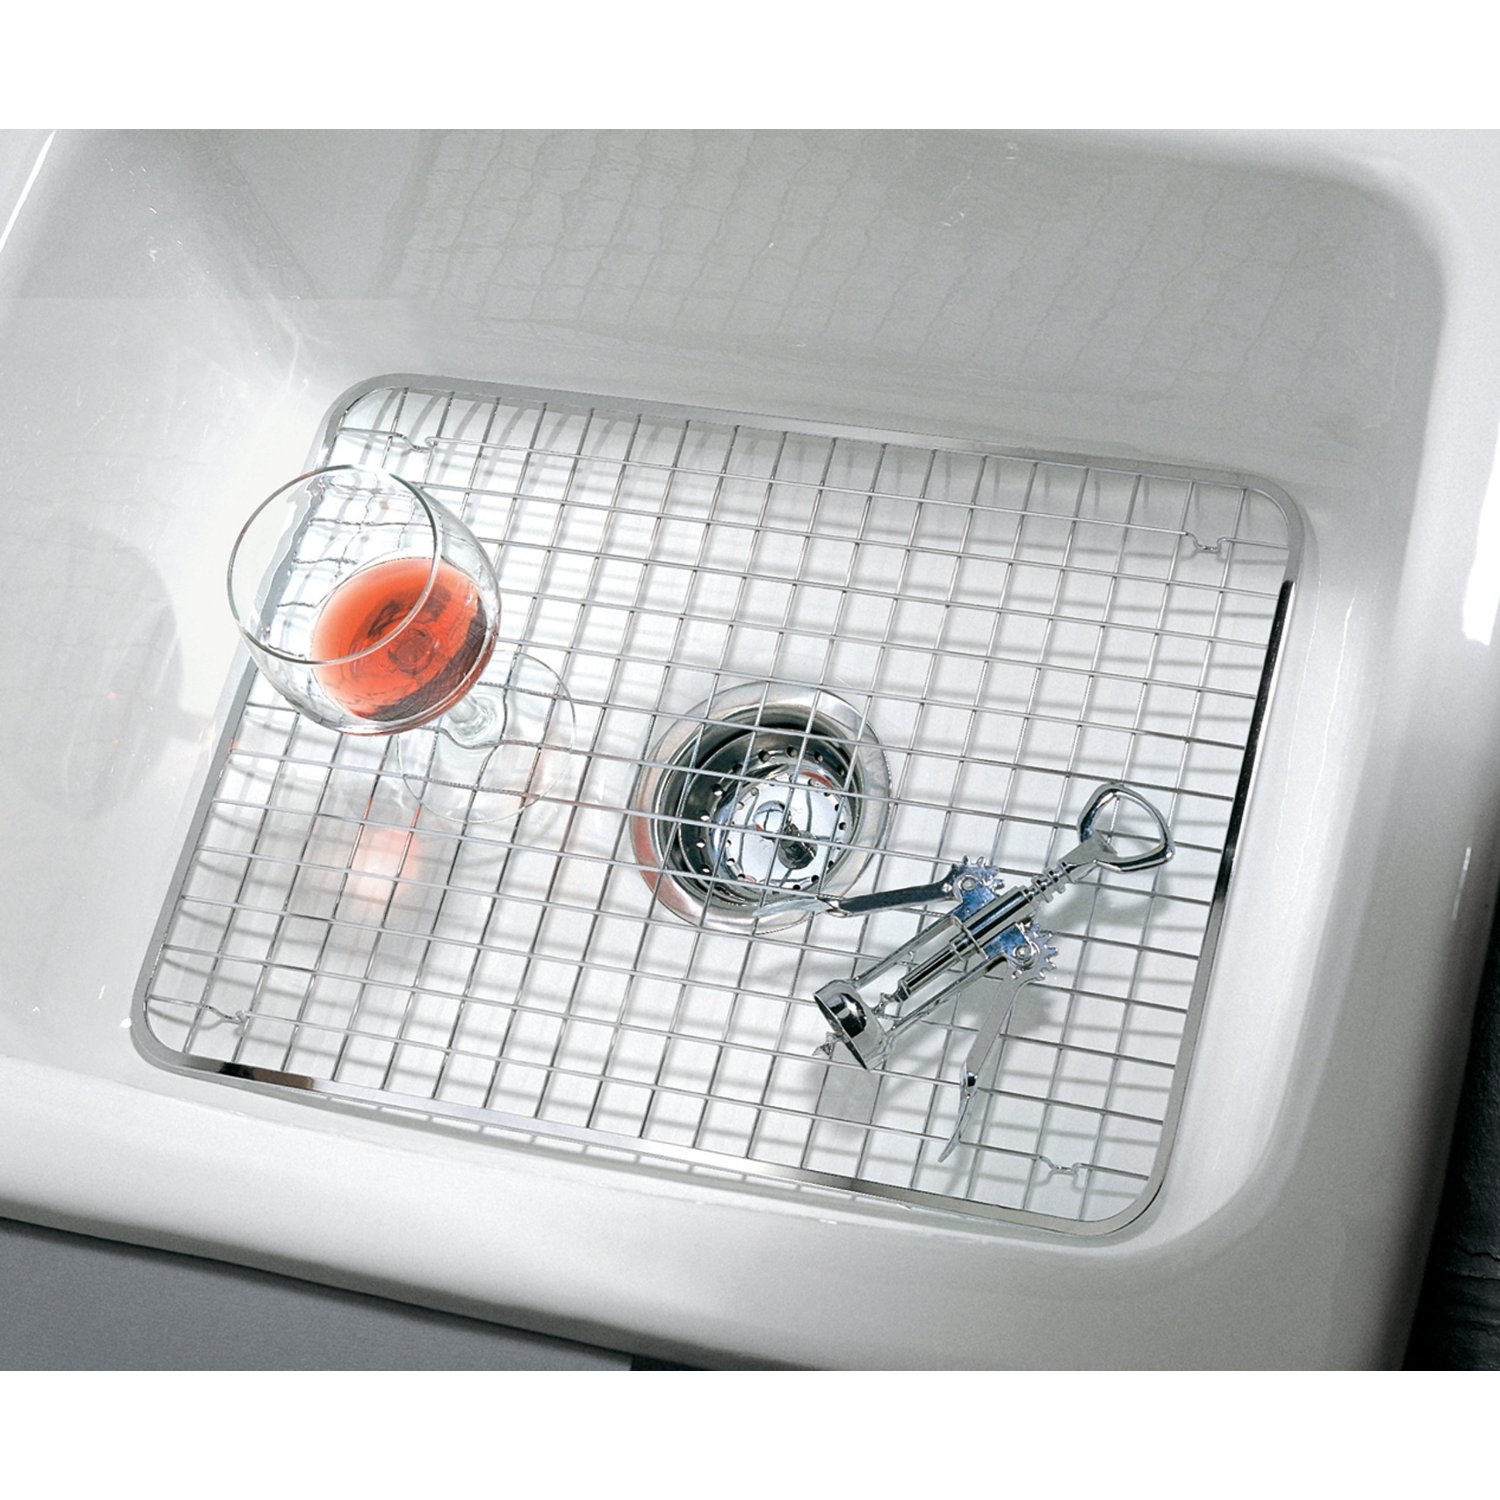 InterDesign Sinkworks Sink Grid, Polished, 12-6/10 by 16-25/100-Inches